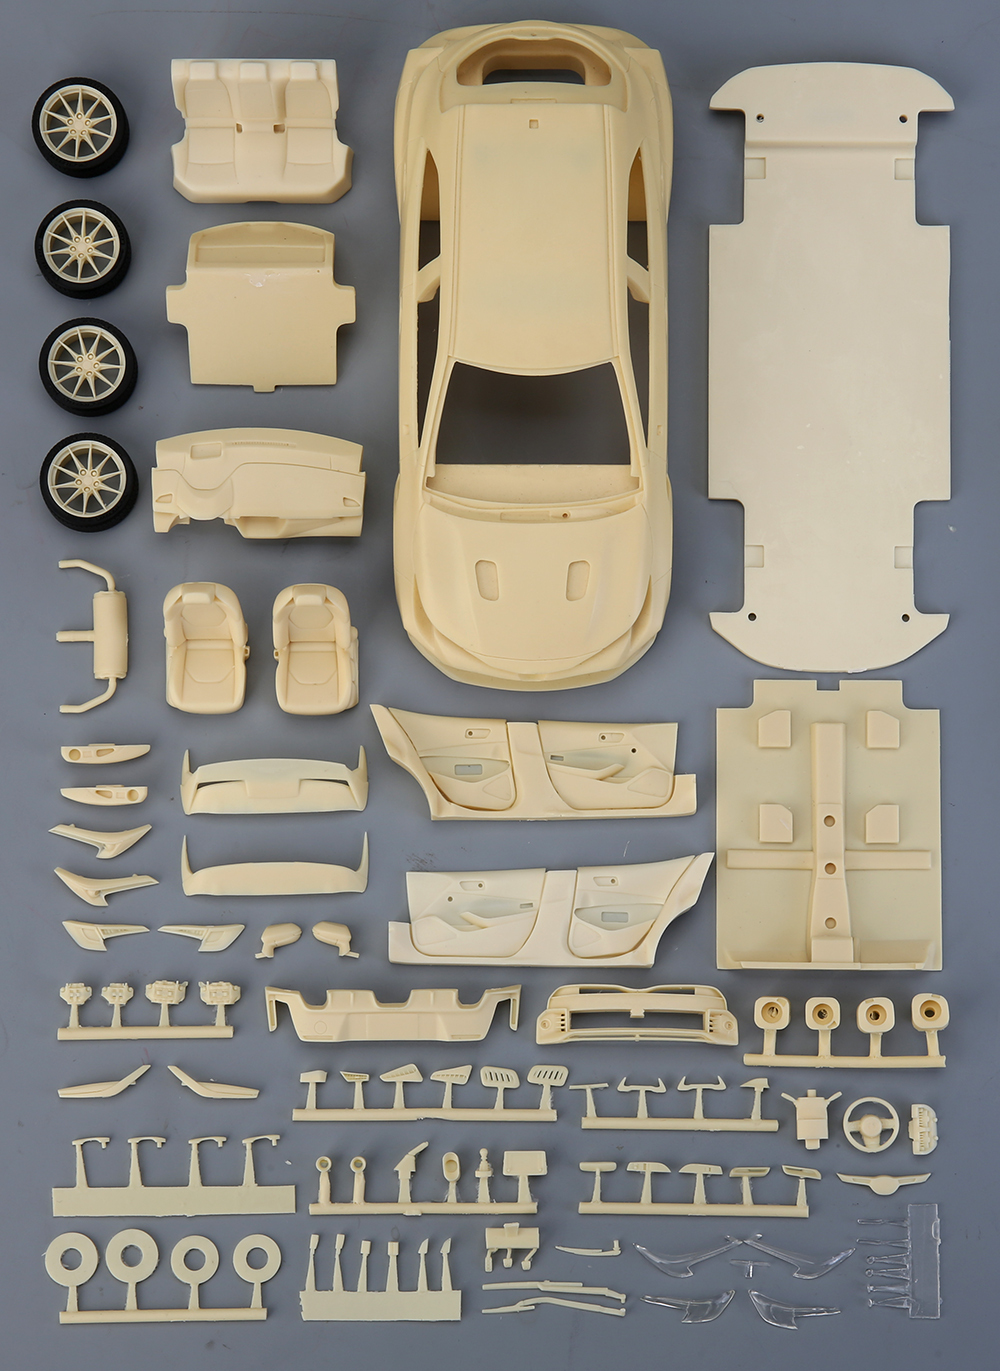 1/24 scale model car kit Ferrari SF90 Stradale-Alpha Model